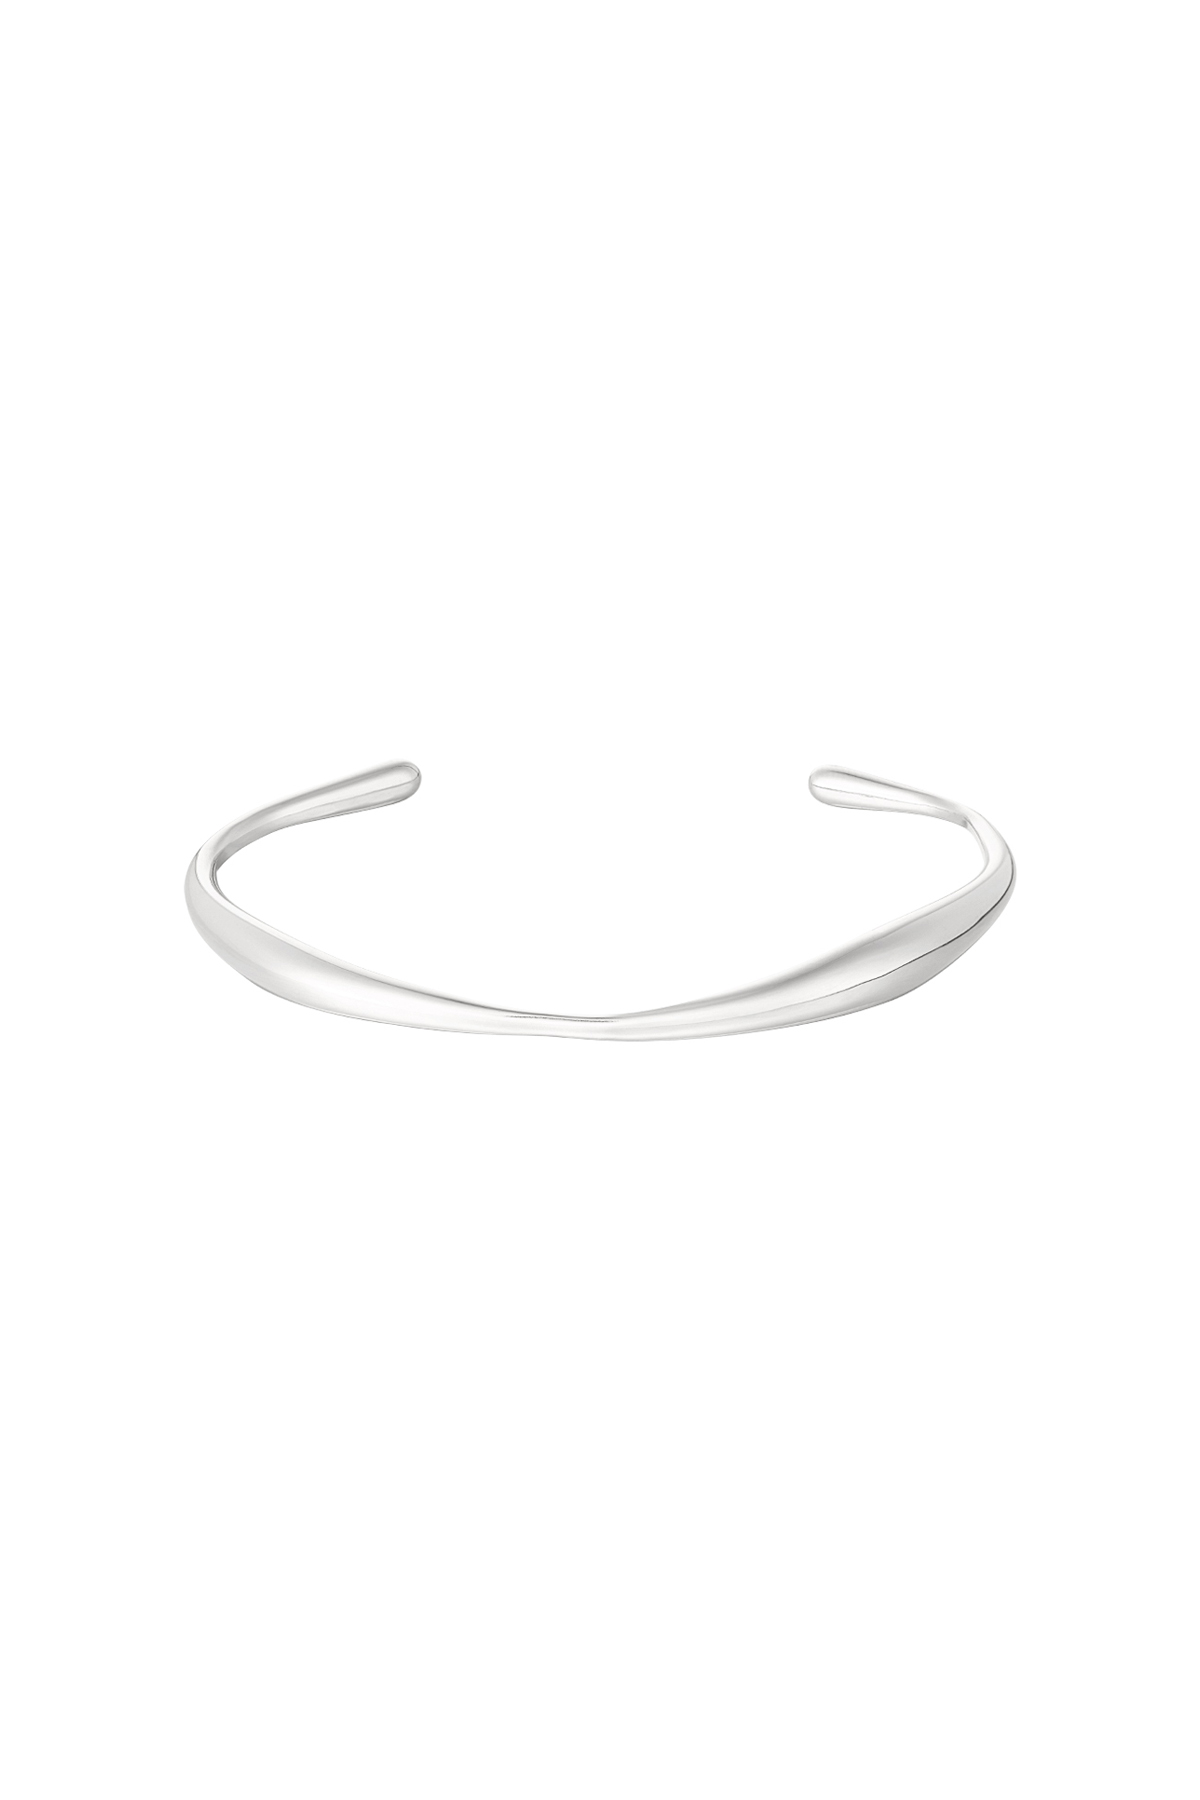 Organic shape bracelet - silver